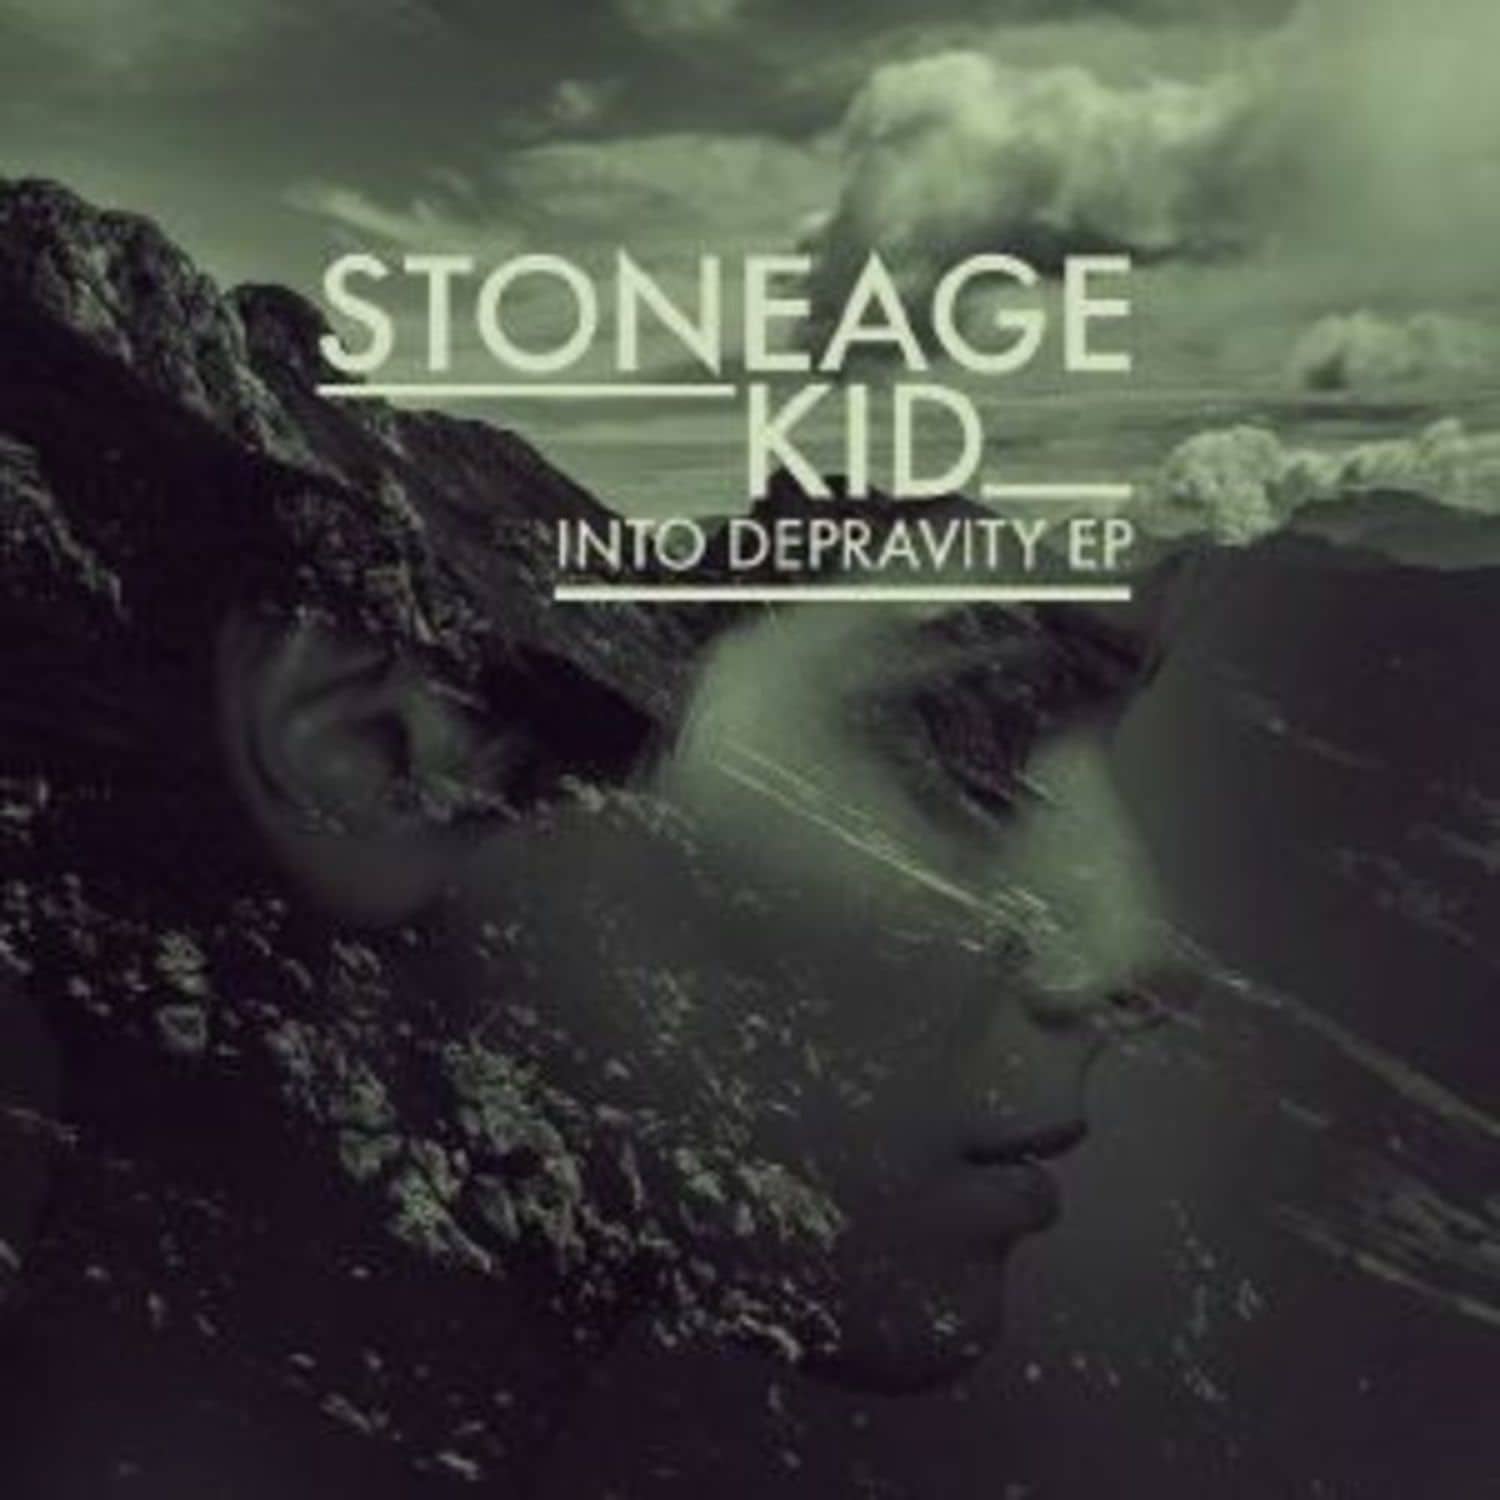 Stoneage Kid - INTO DEPRAVITY EP